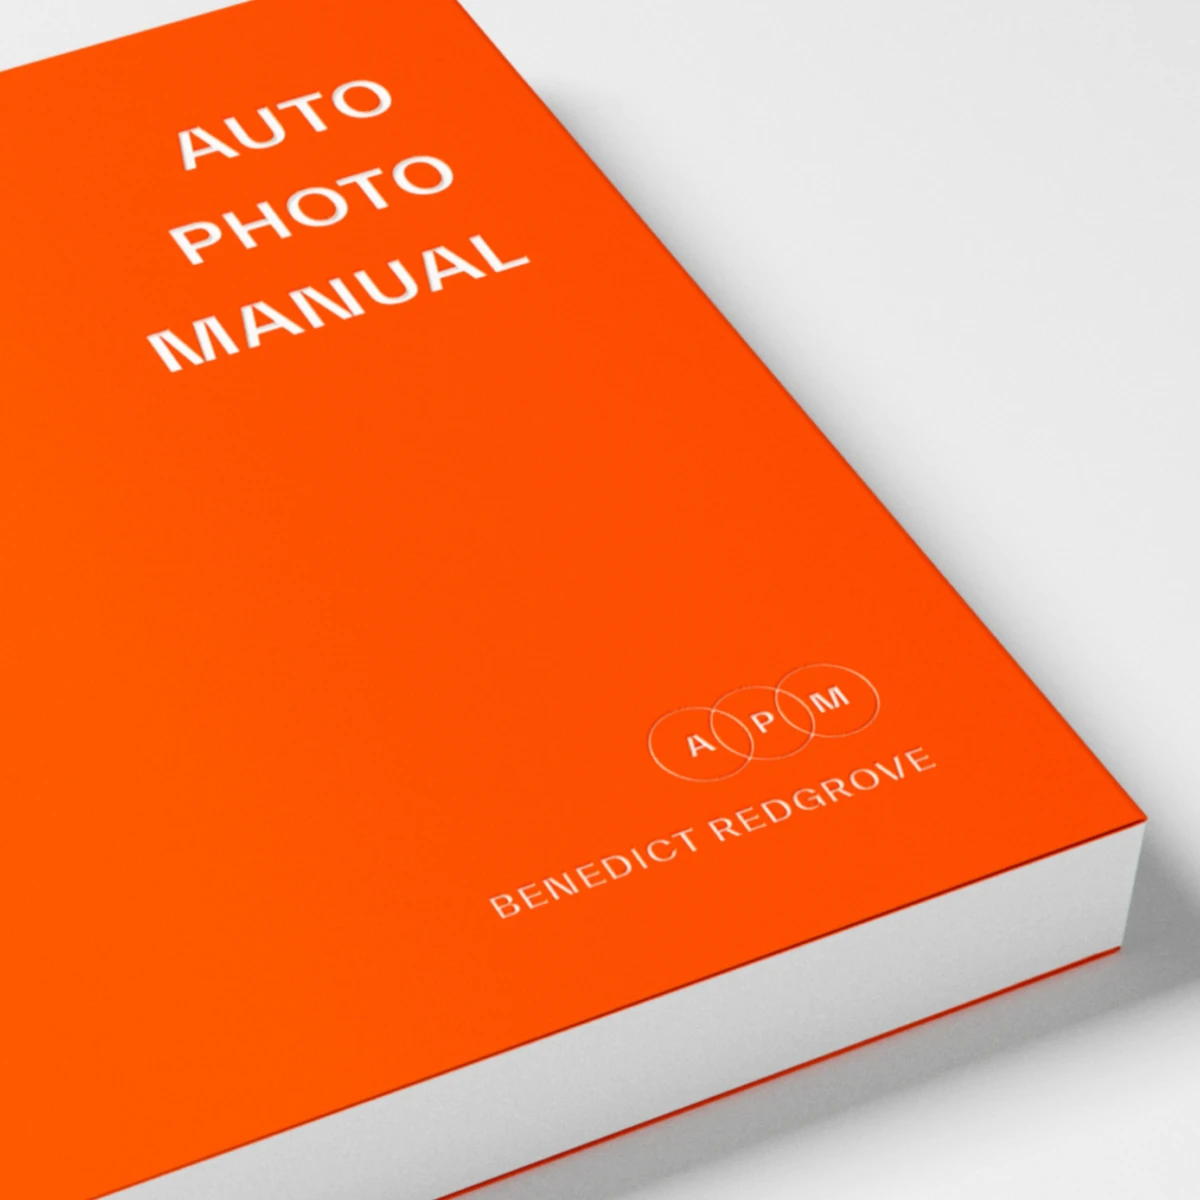 Auto Photo Manual by Benedict Redgrove - On Kickstarter Now